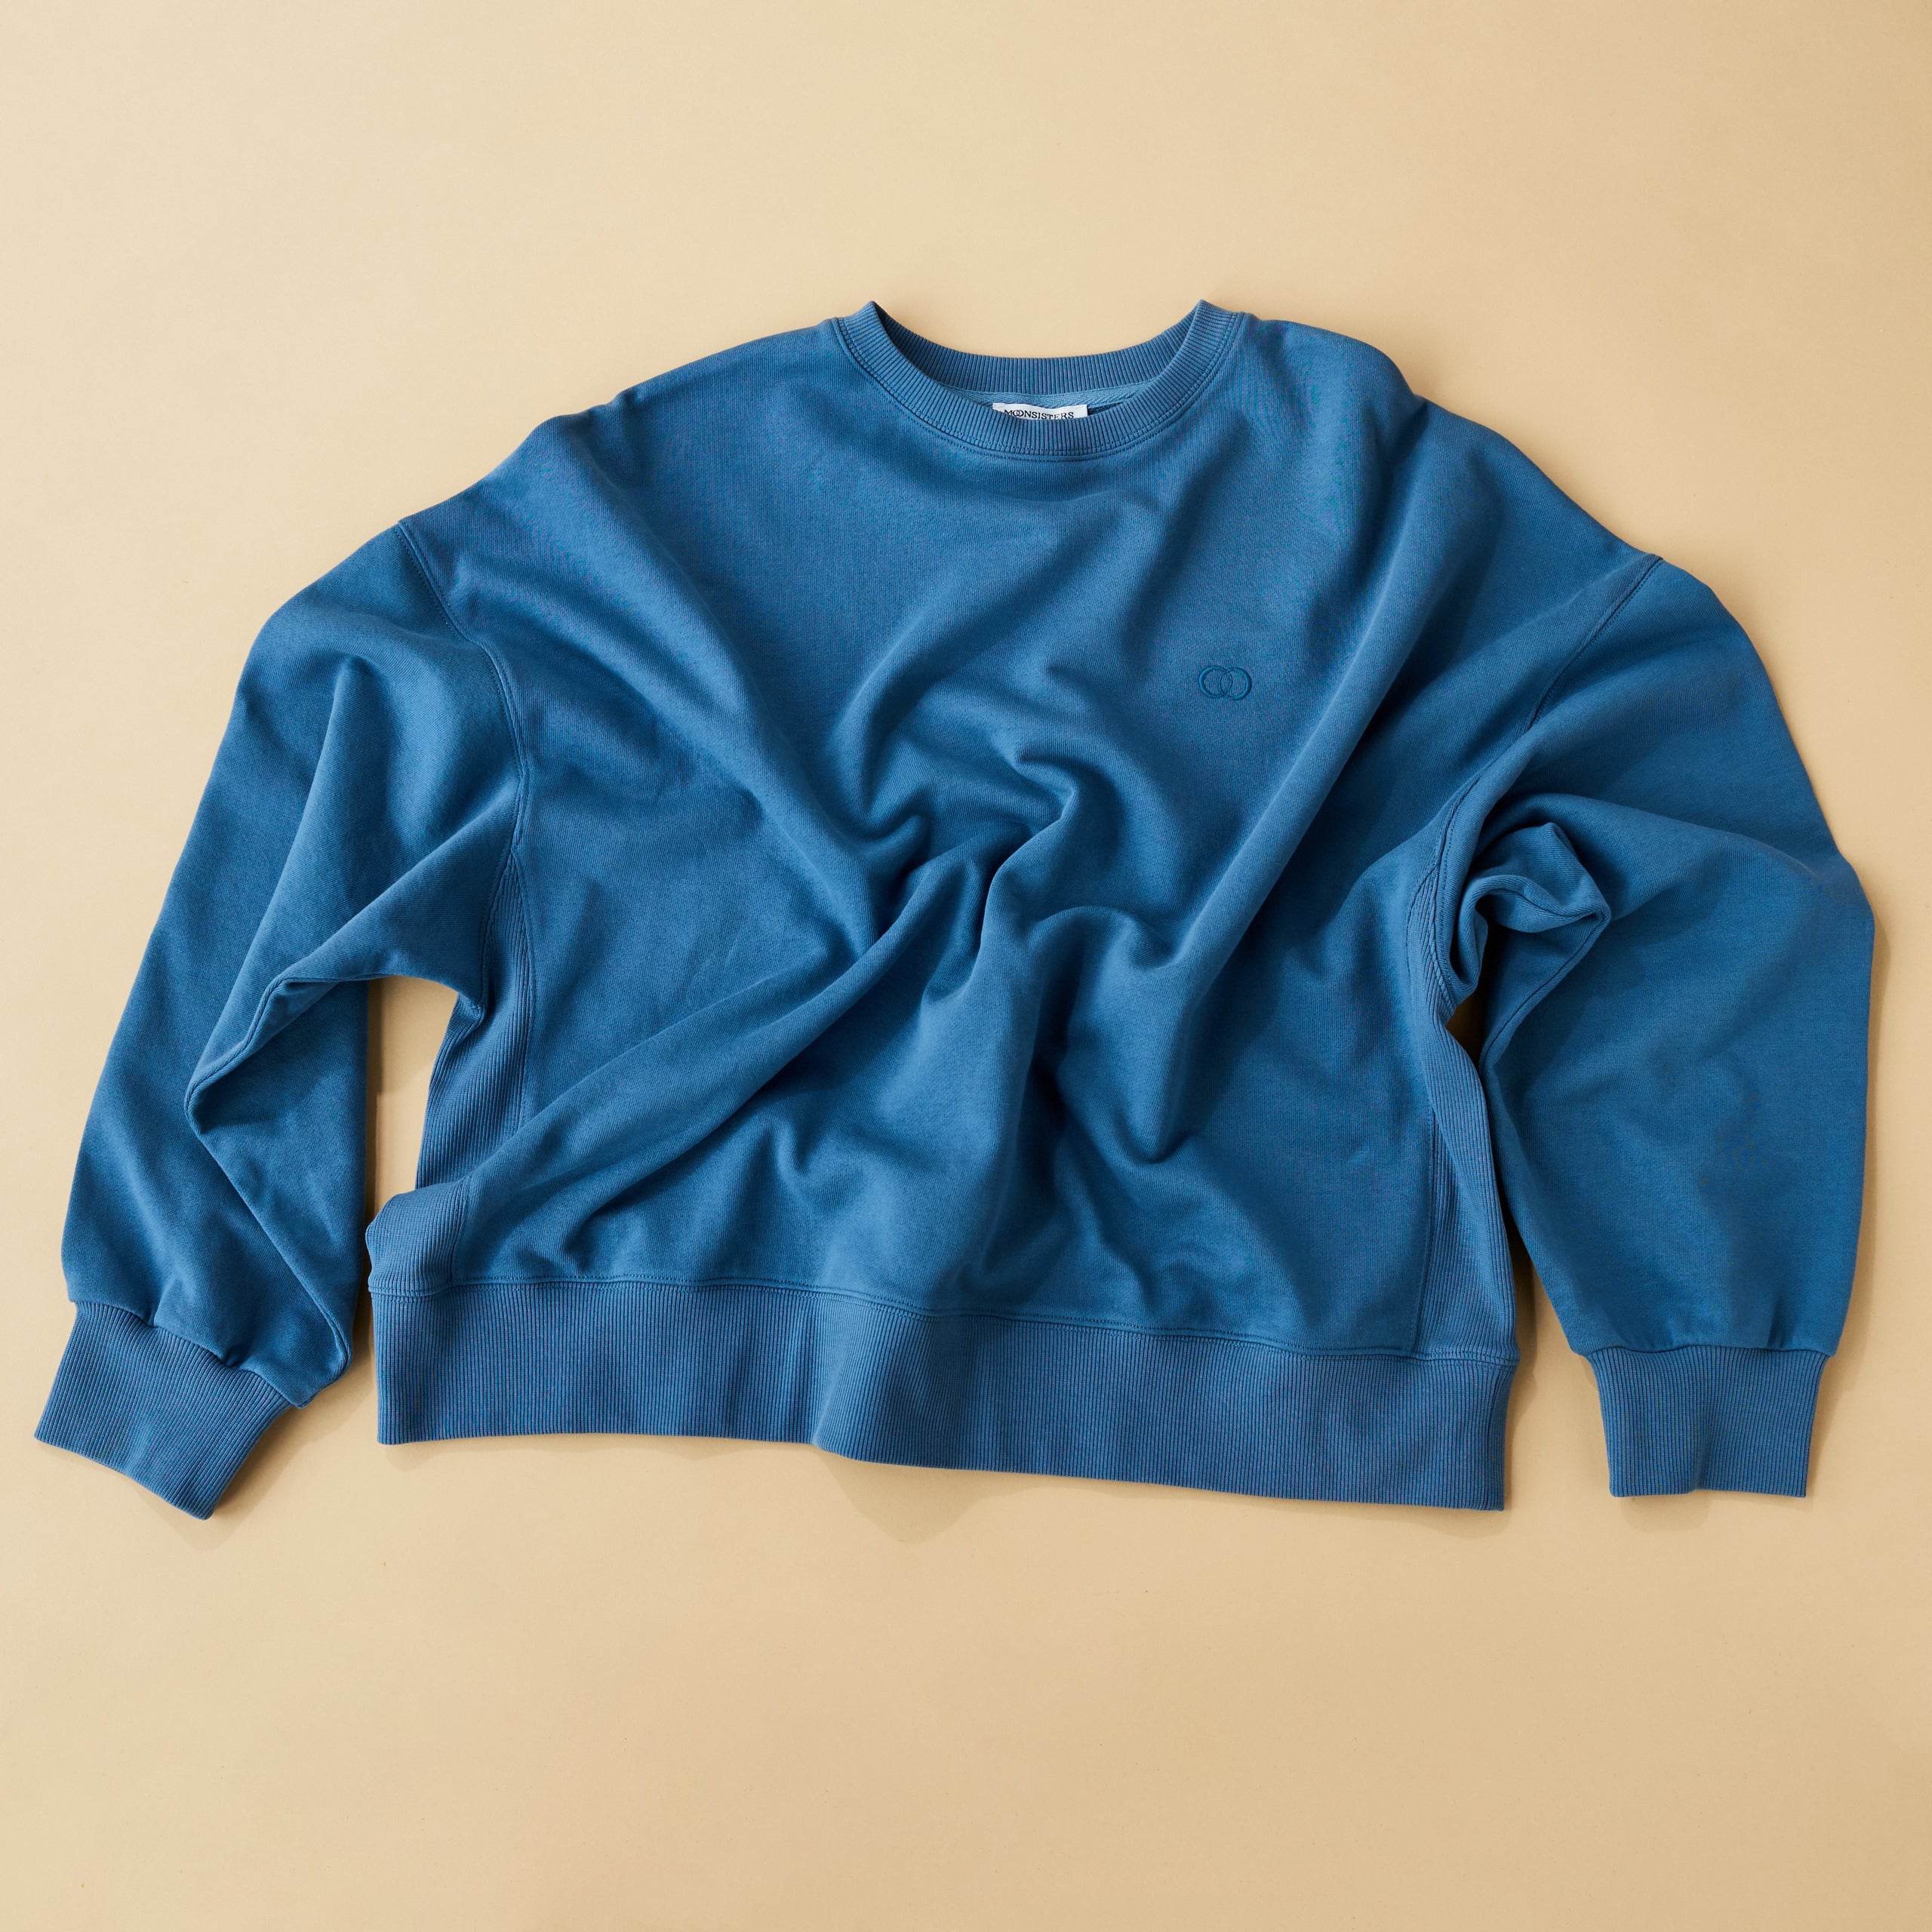 Supreme Sweater Blue Moon size m/l